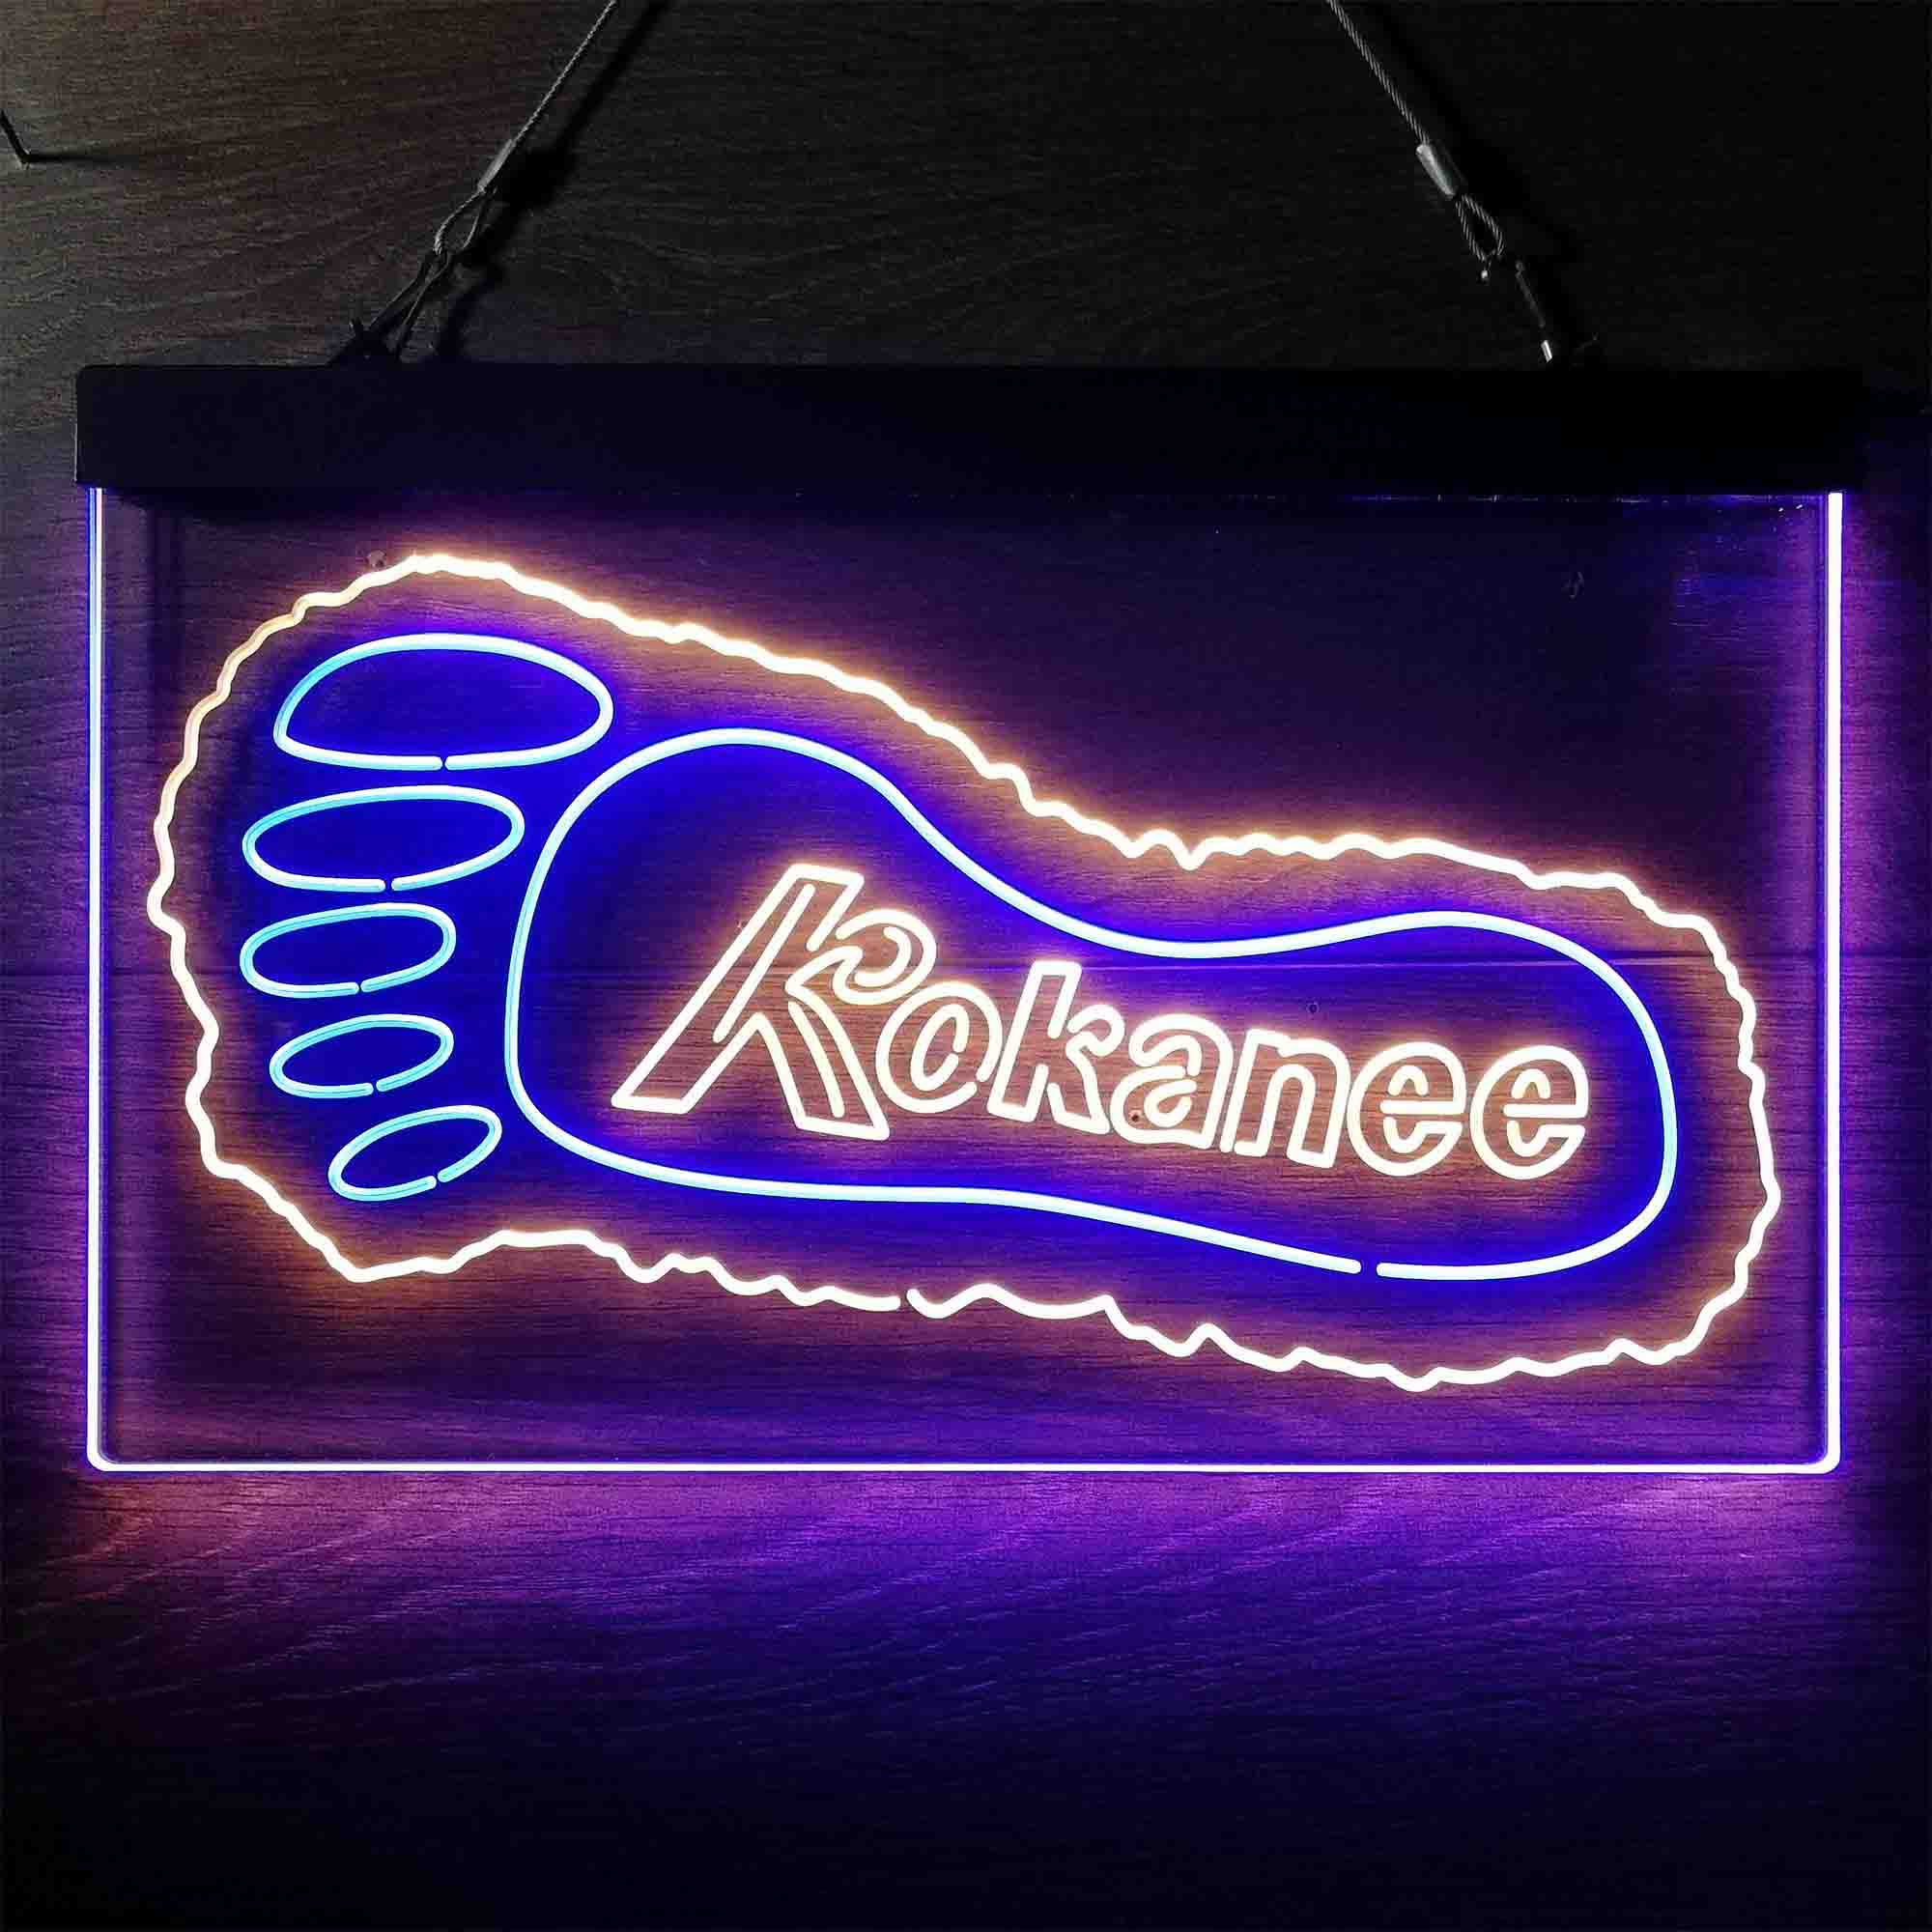 Kokanee Beer Foot Neon-Like LED Sign